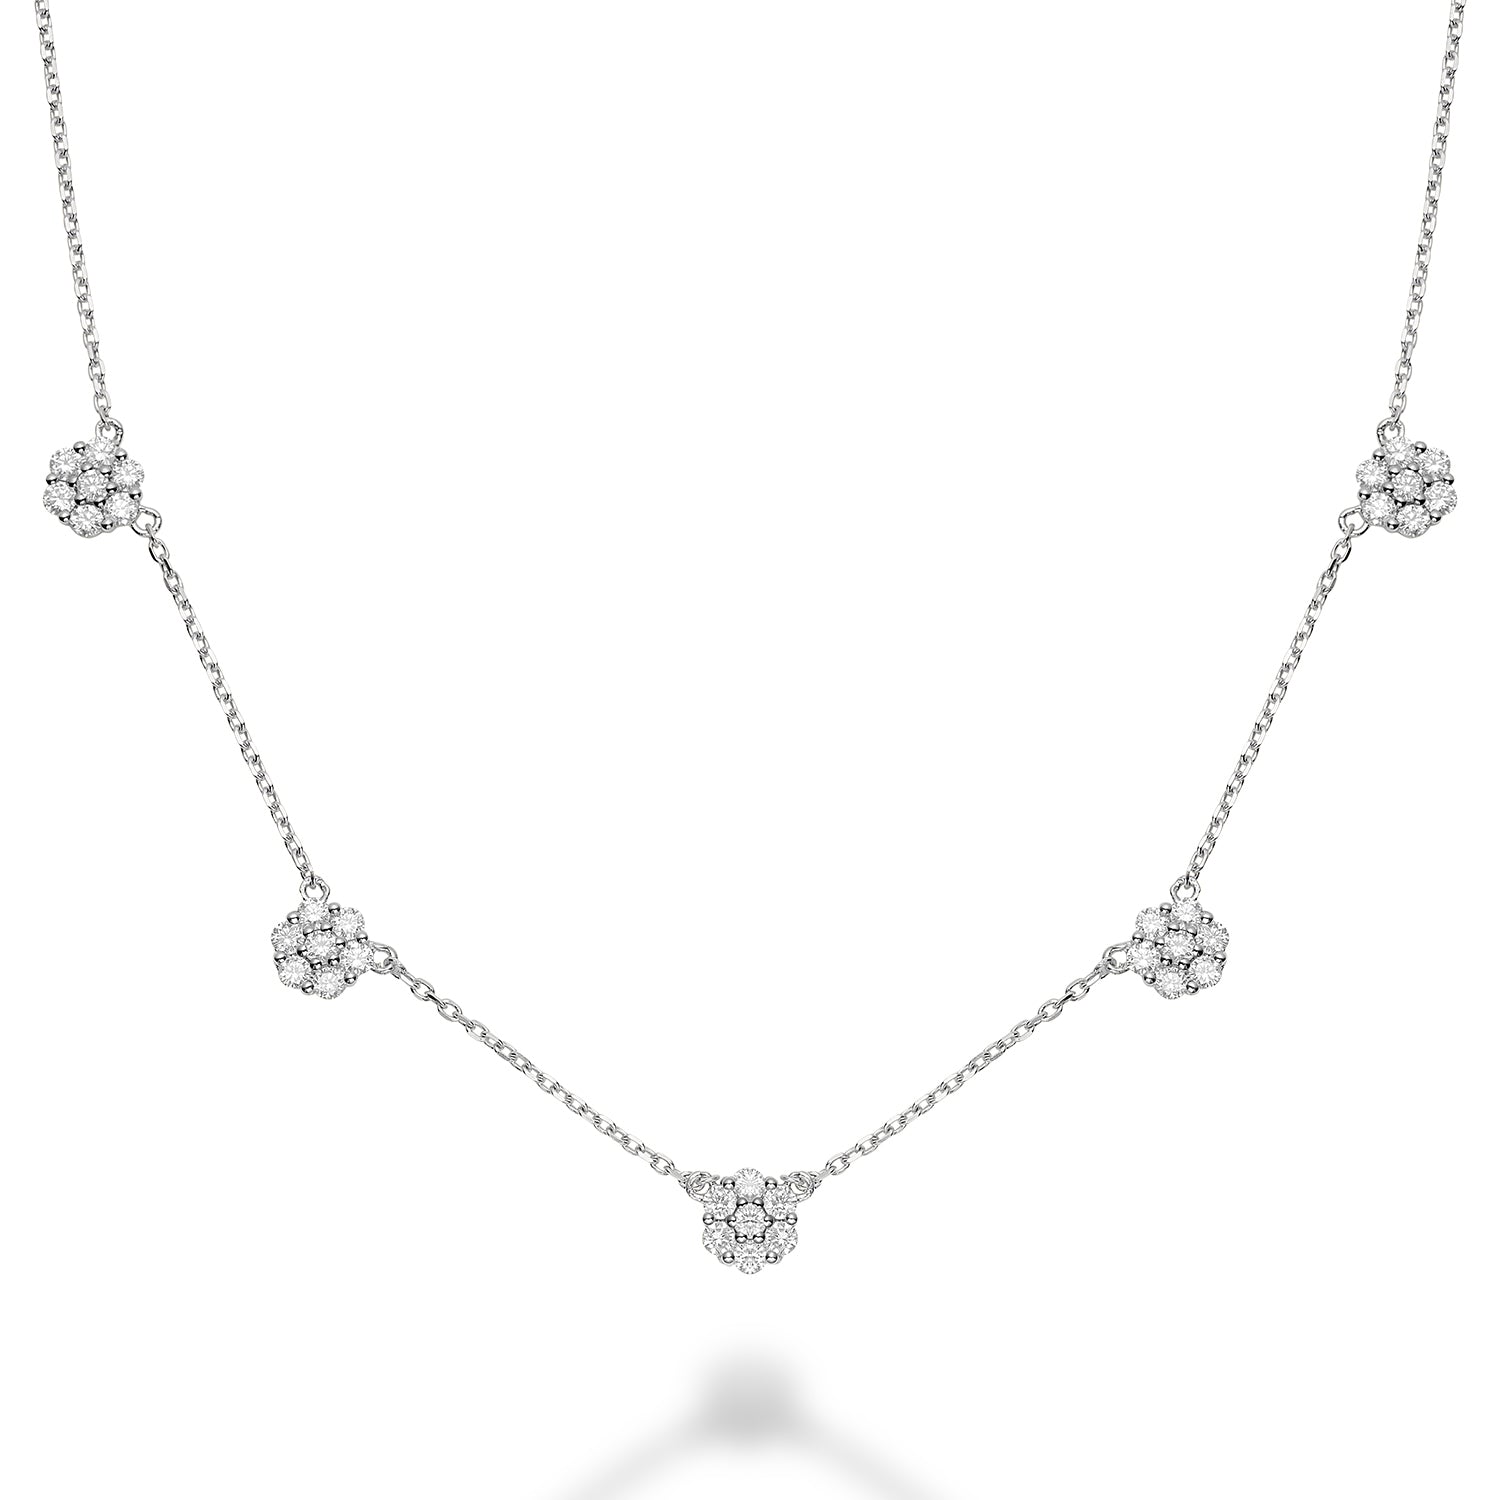 Hemsleys Collection 14K Flower Illusion Set 5 Station Round Diamond Necklace